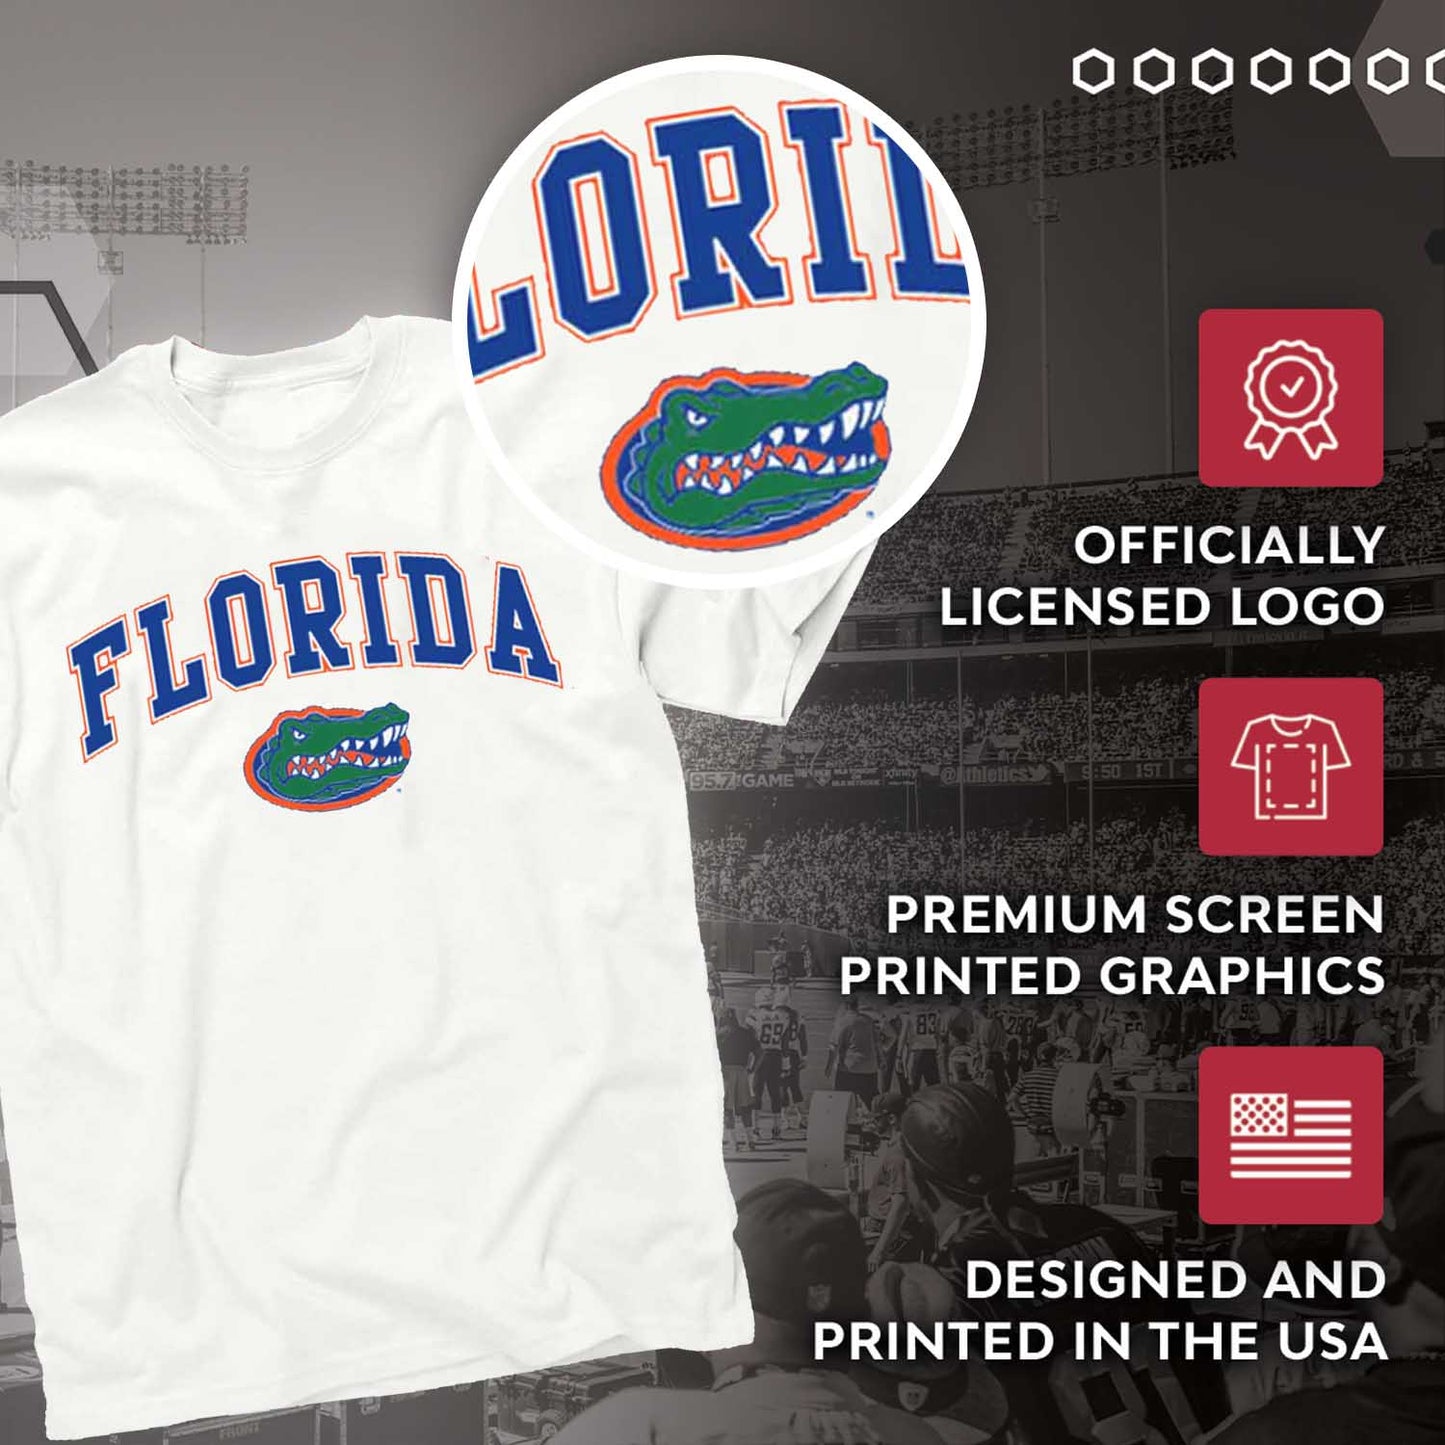 Florida Gators NCAA Adult Gameday Cotton T-Shirt - White